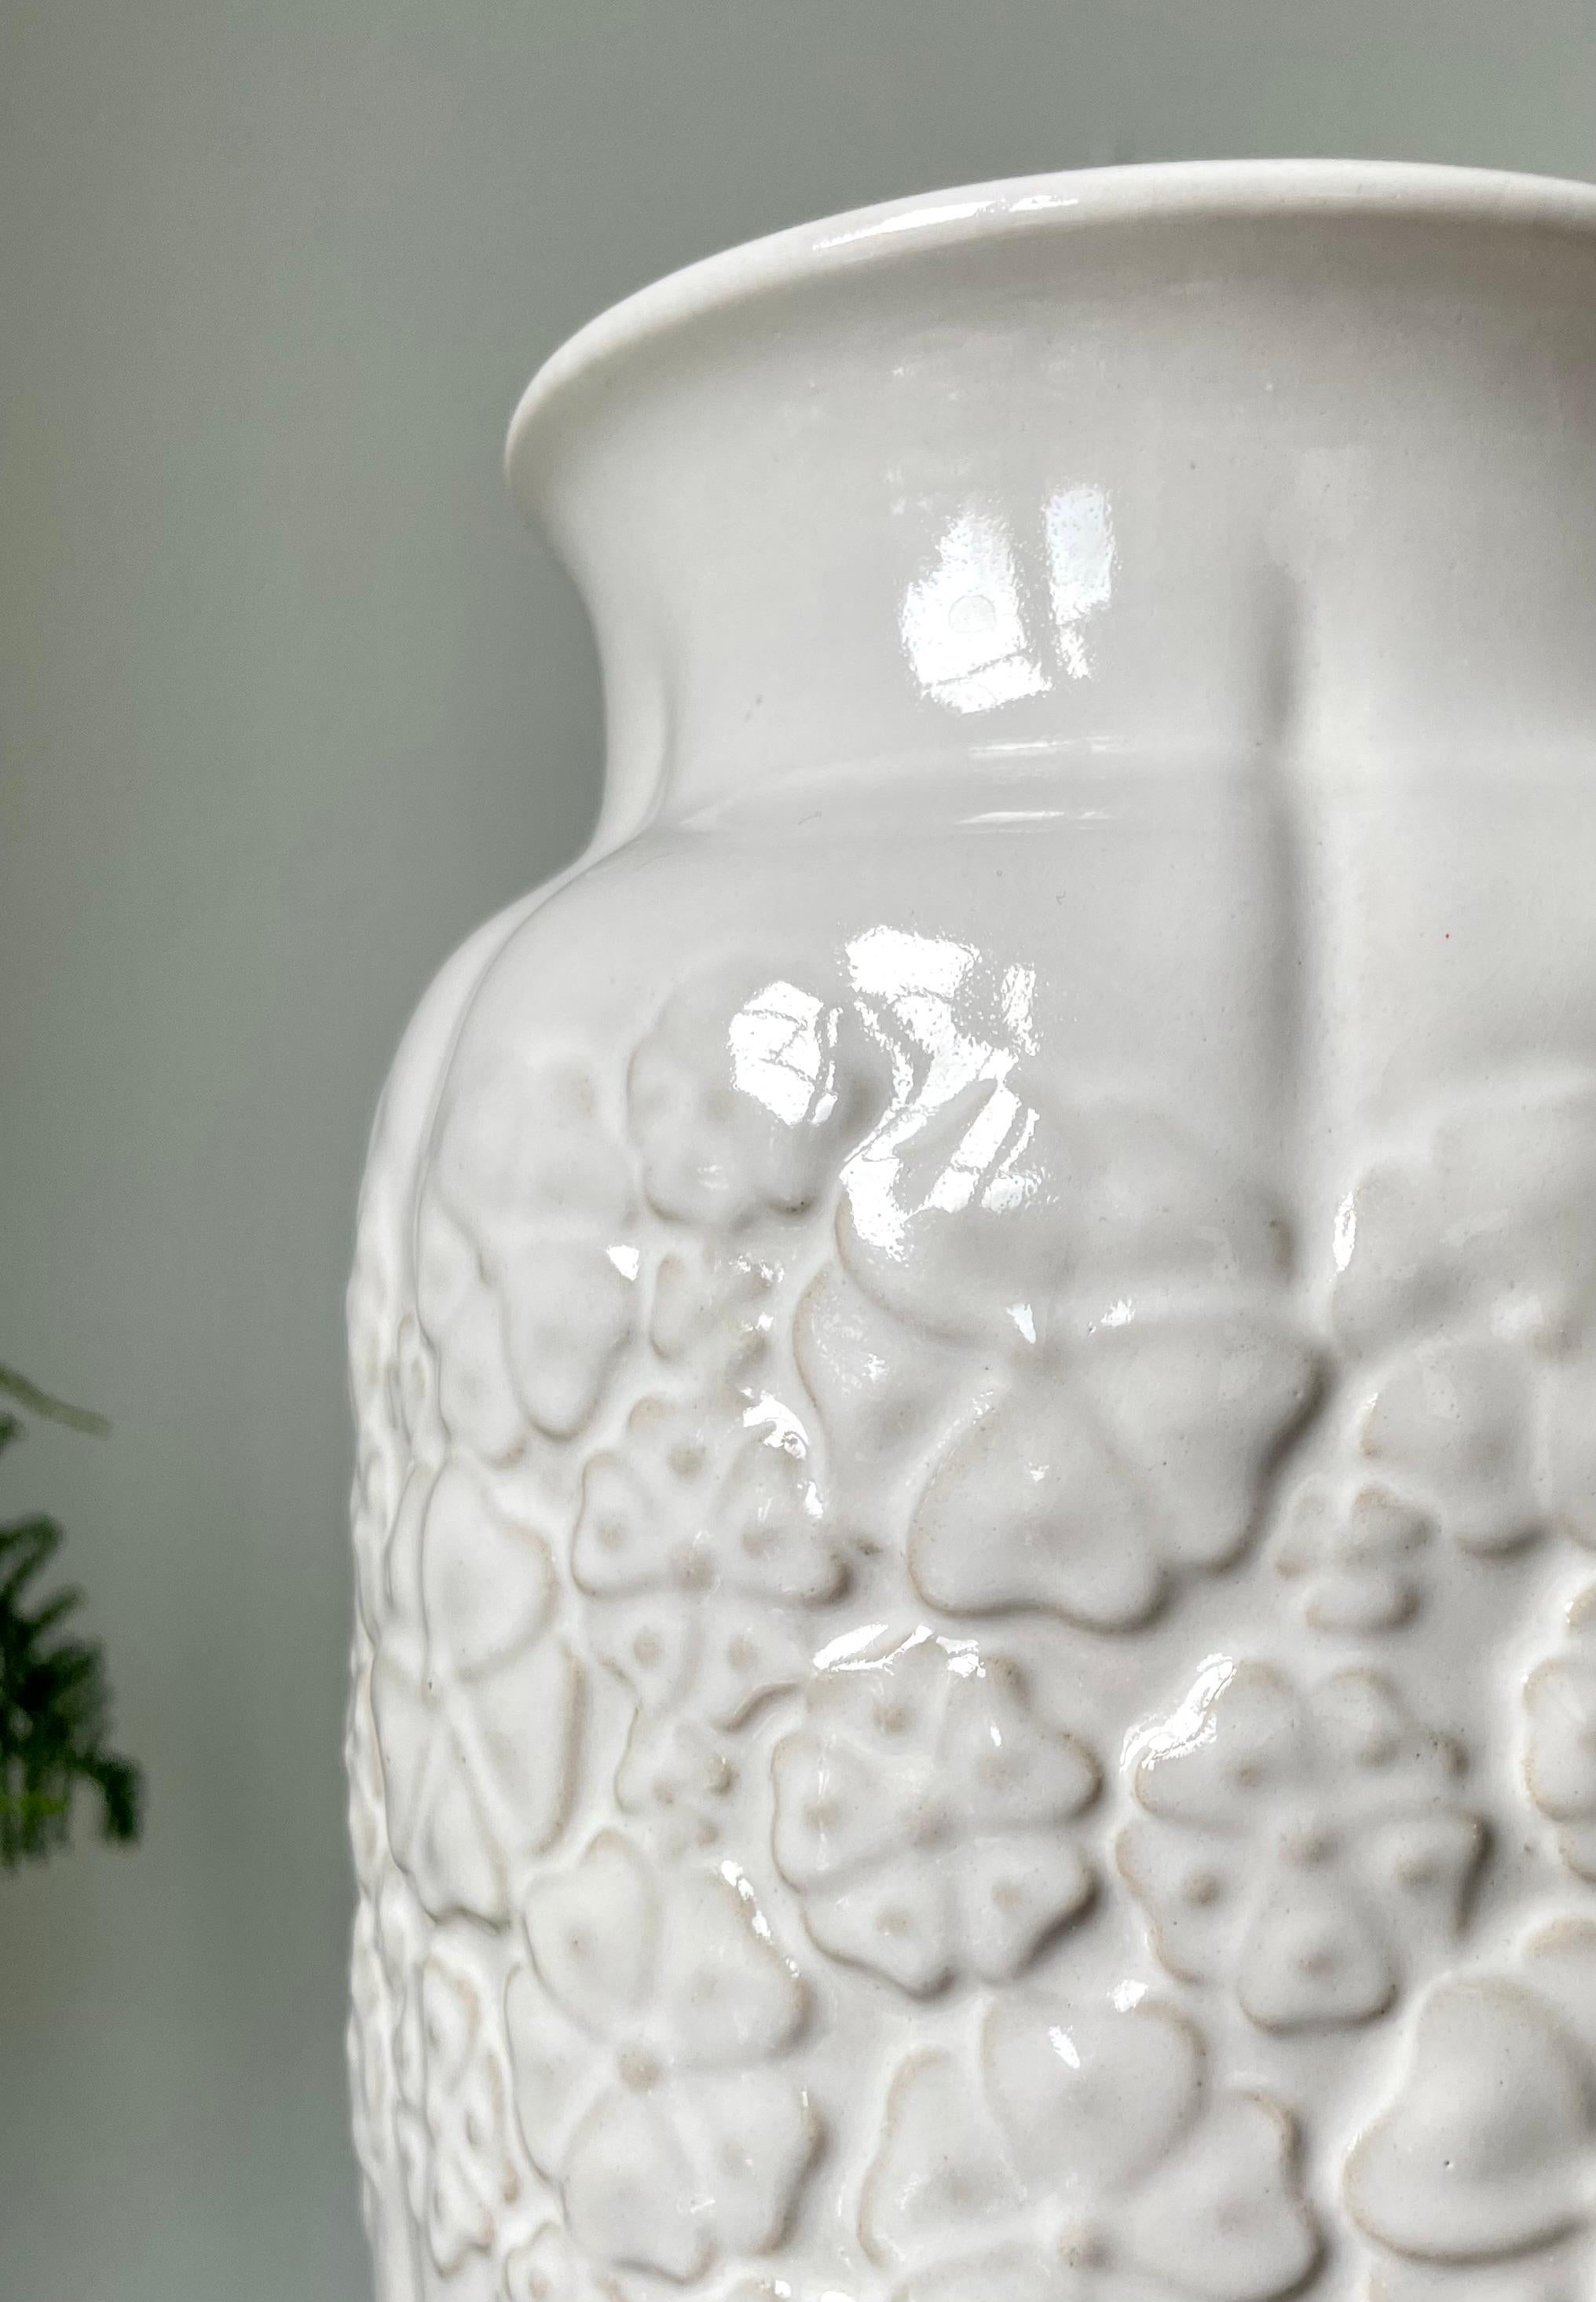 Bay Keramik Tall White Modernist Floor Vase With Organic Decor, 1970s For Sale 6